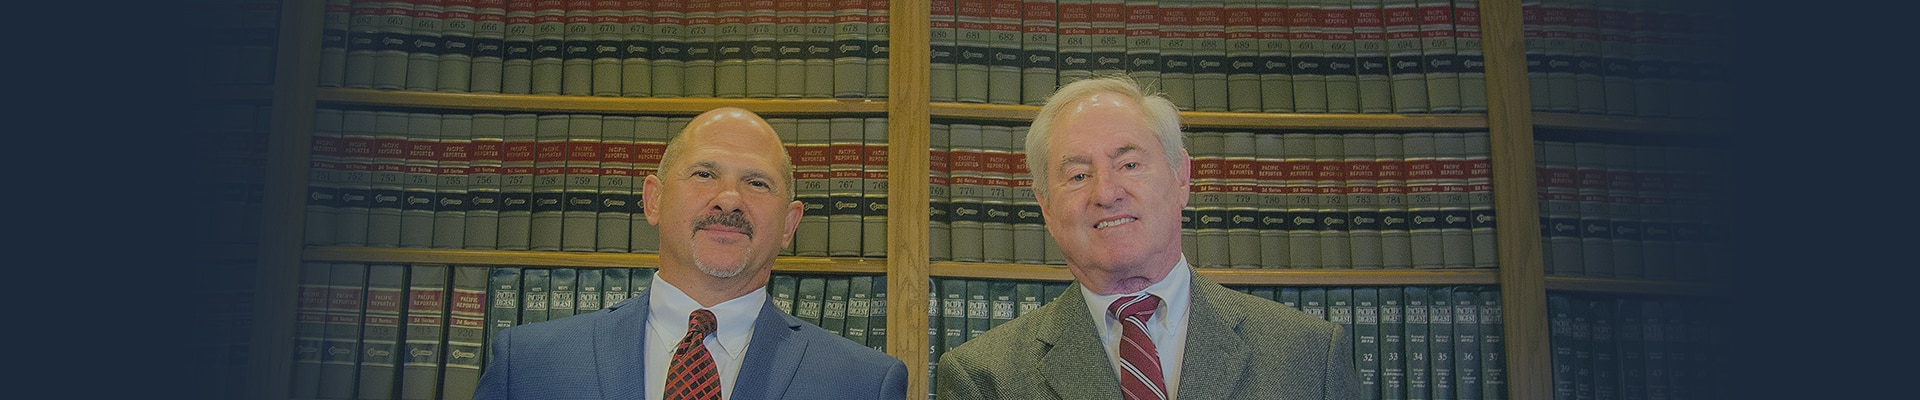 Injury lawyers Jack Hirsch & Greg Lyon